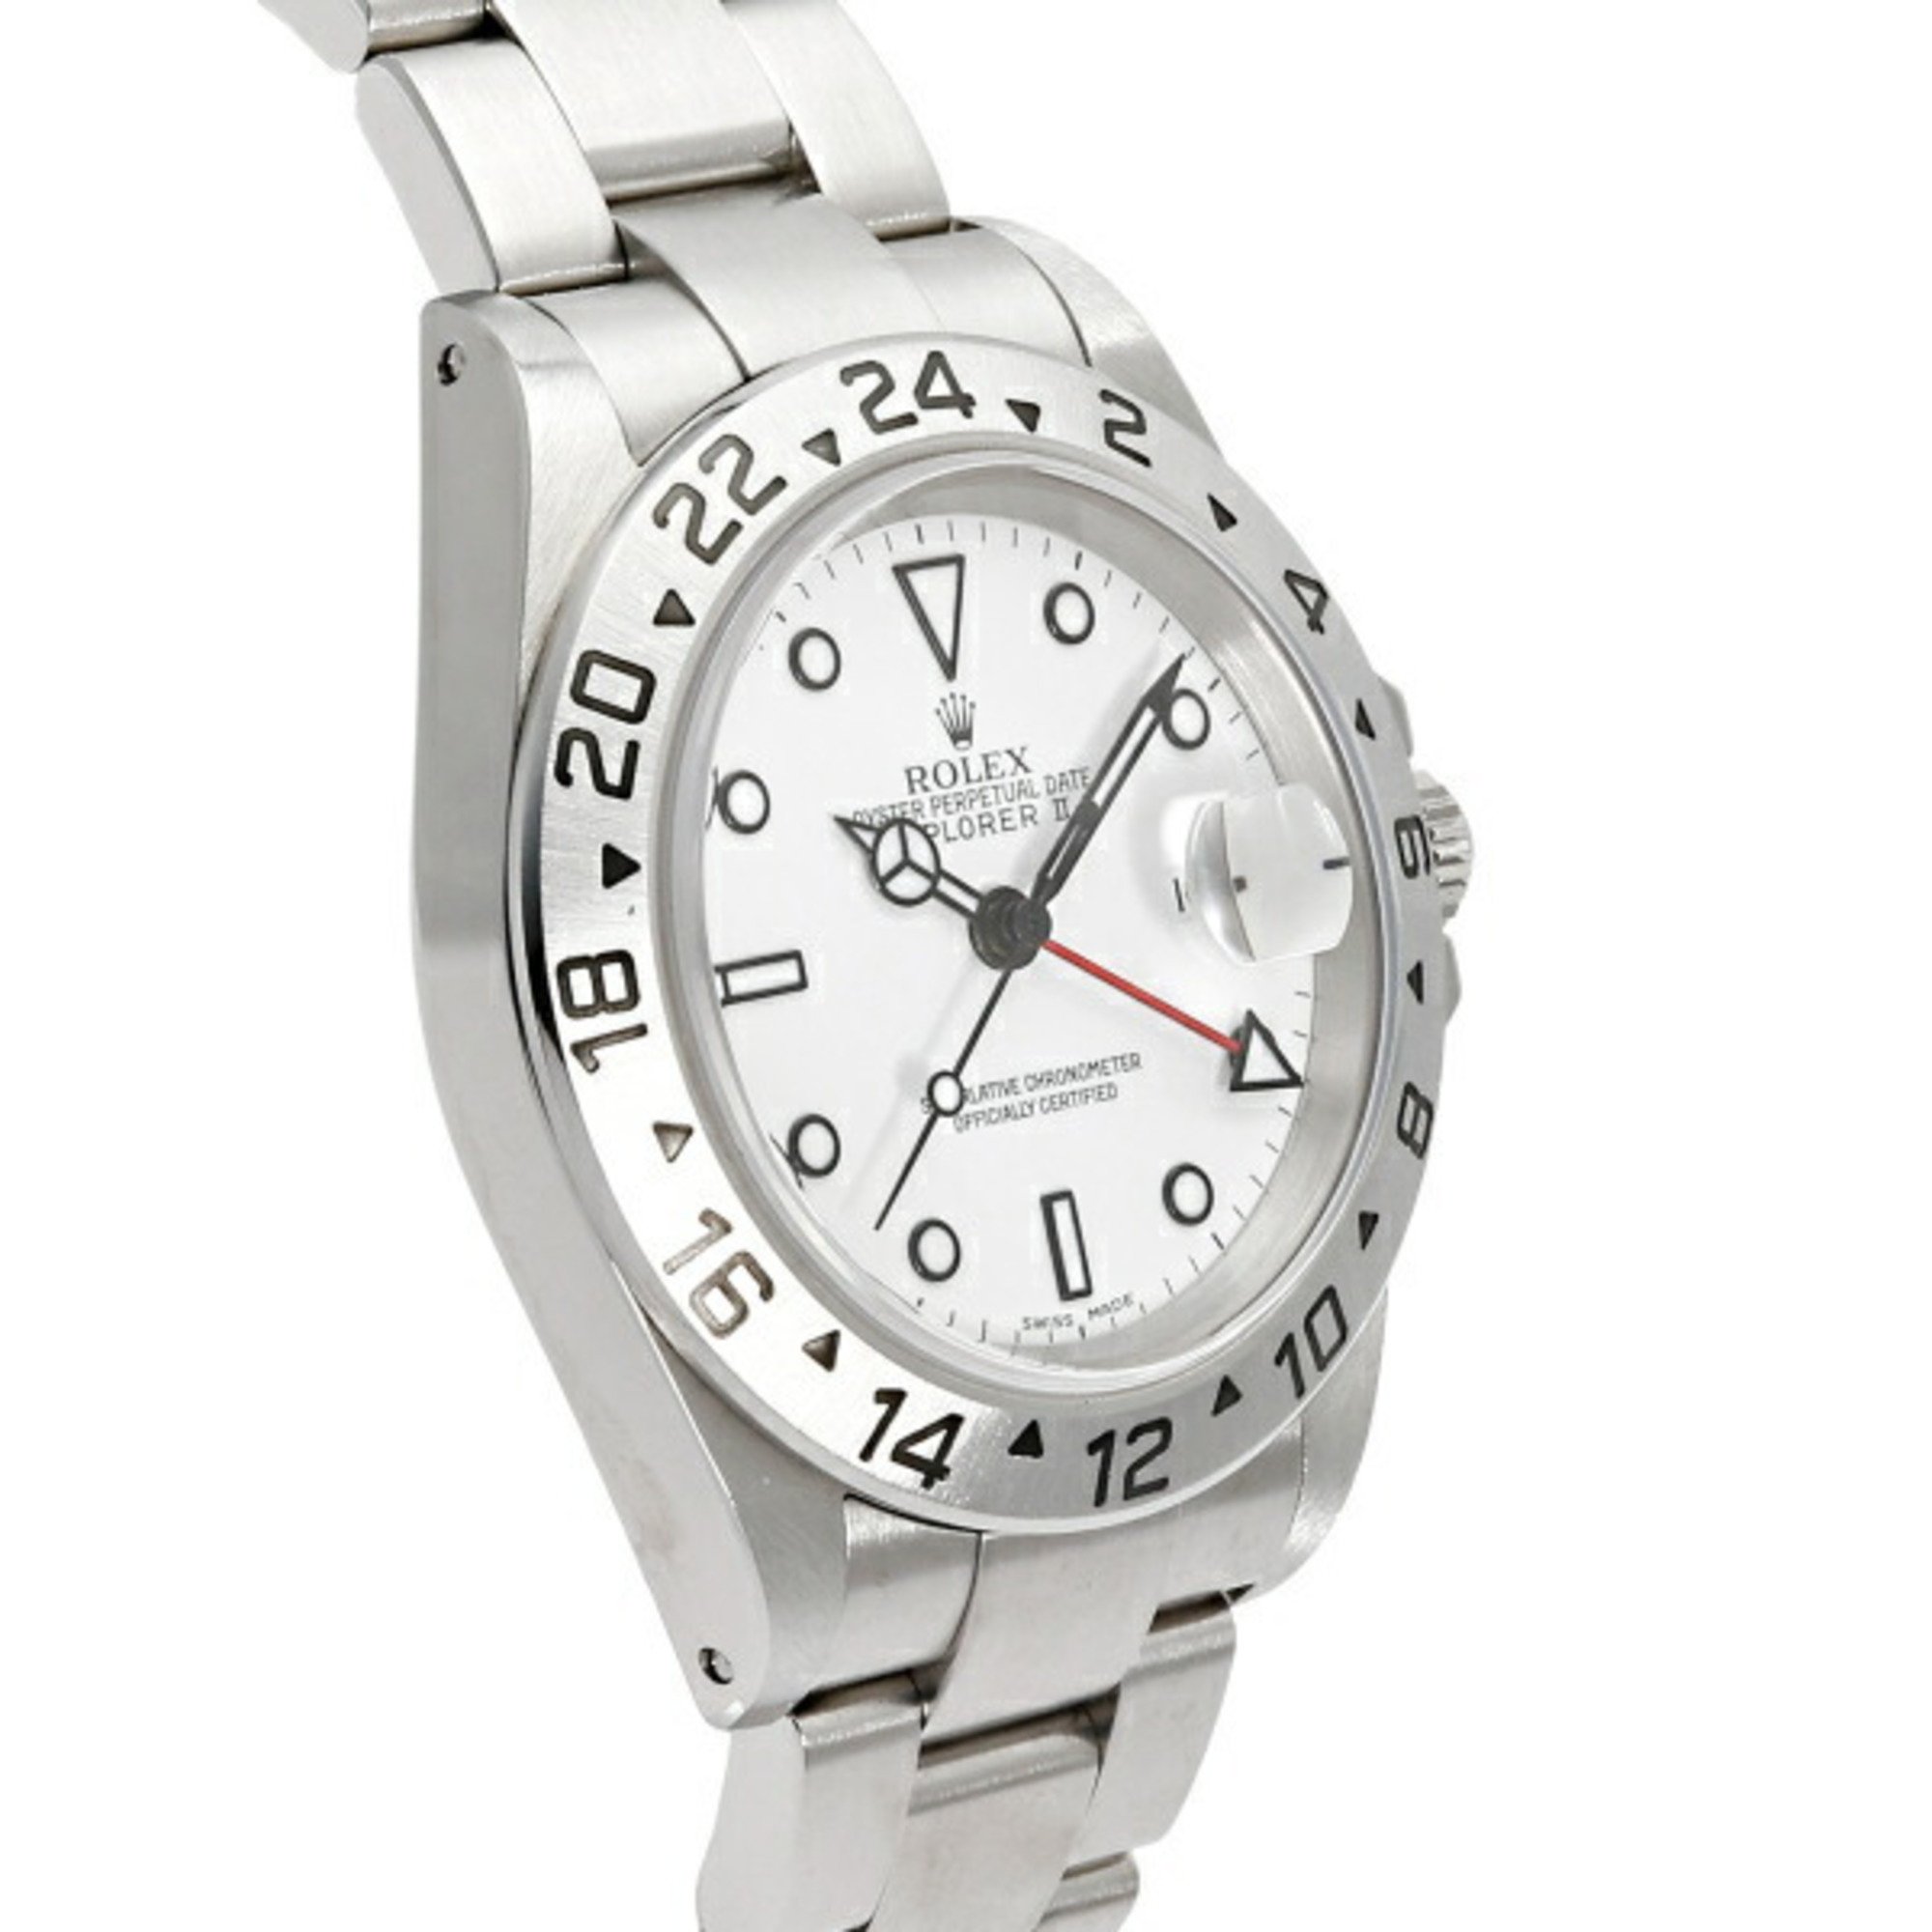 Rolex ROLEX Explorer II 16570 White Dial Men's Watch